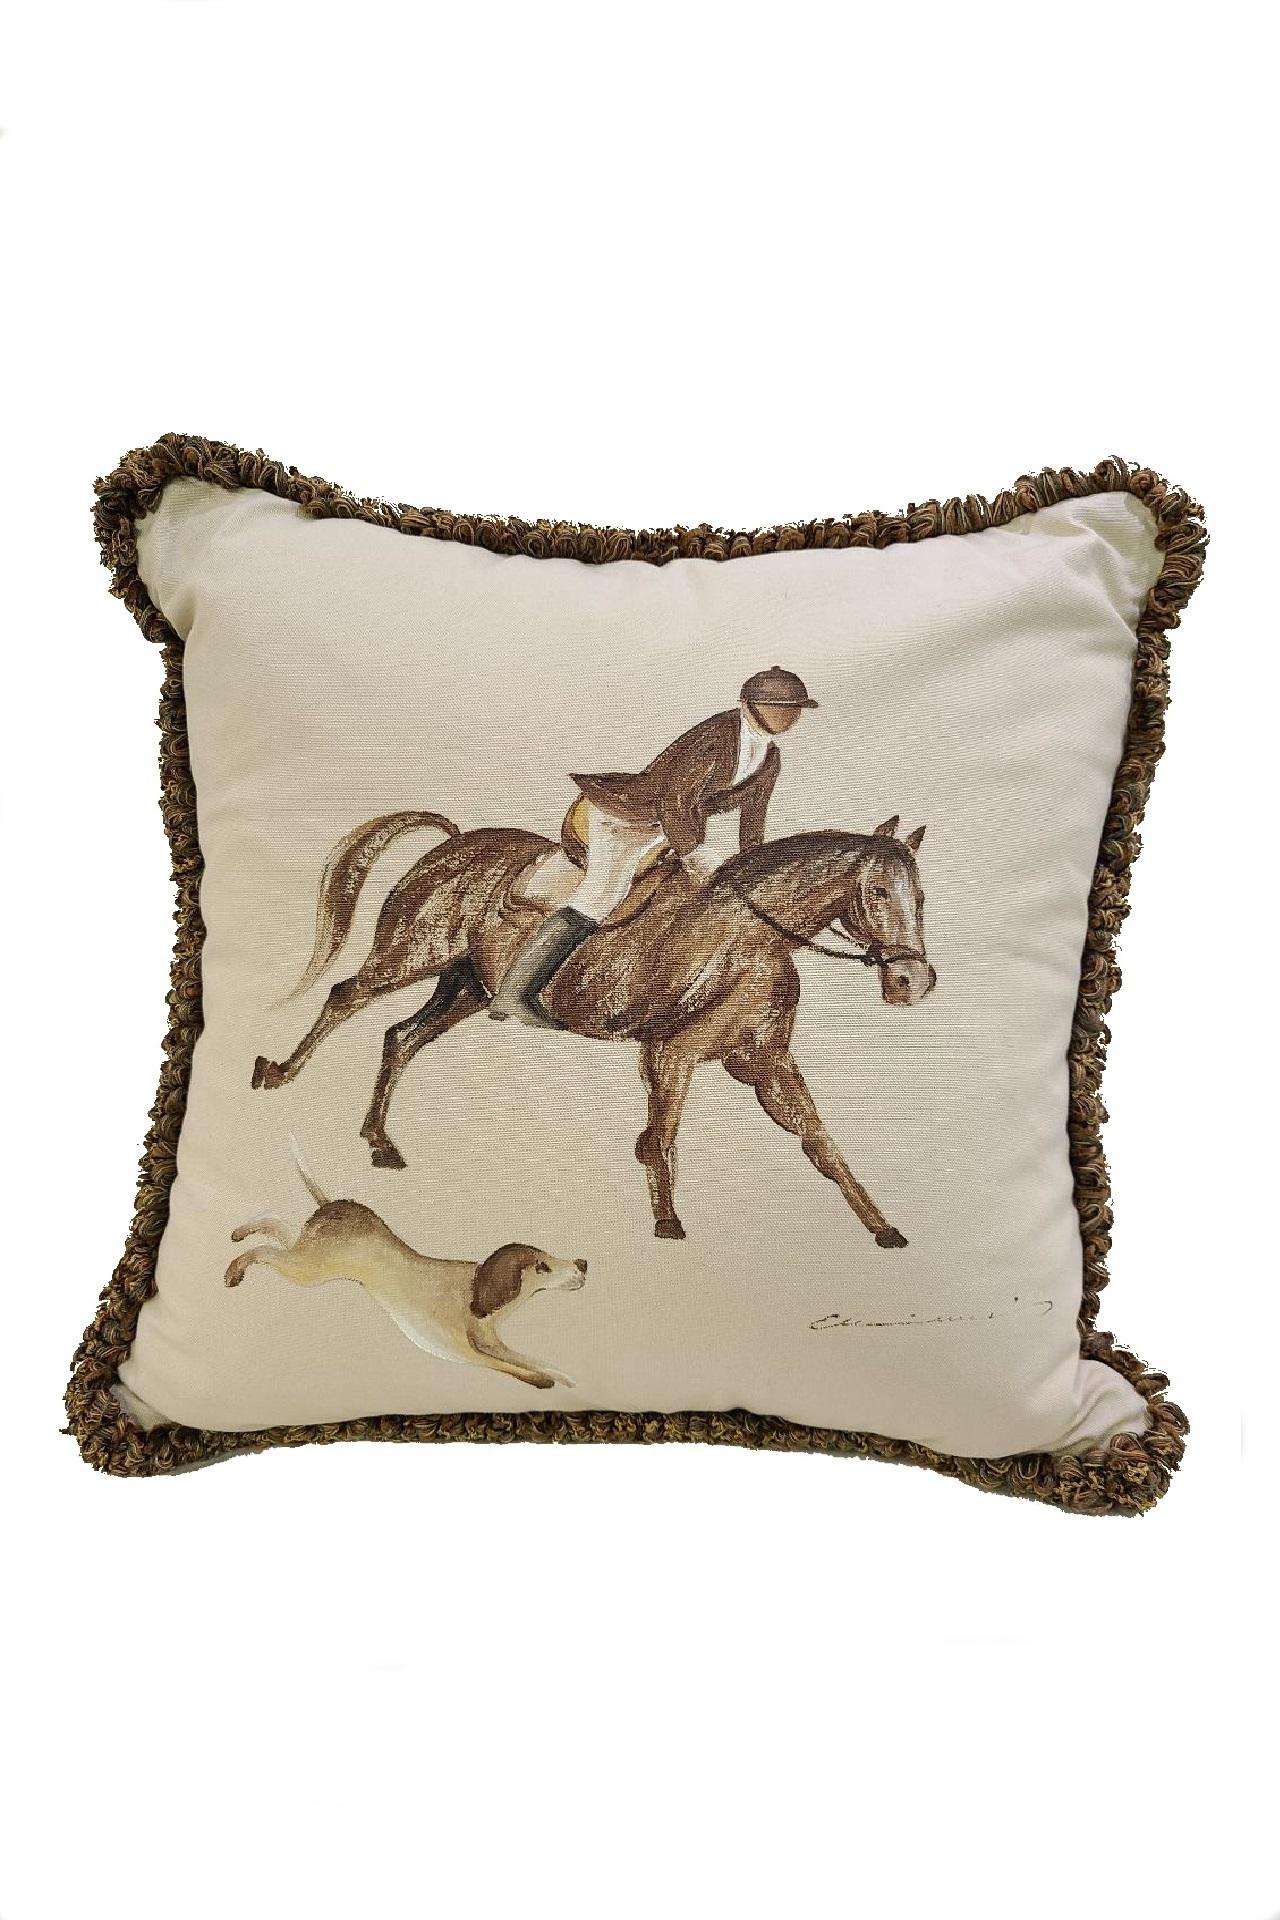 https://horsecountrycarrot.com/img/upload/fullsize/Pillow_Handpainted_Rider_Hound_16x16_2_WM.jpg